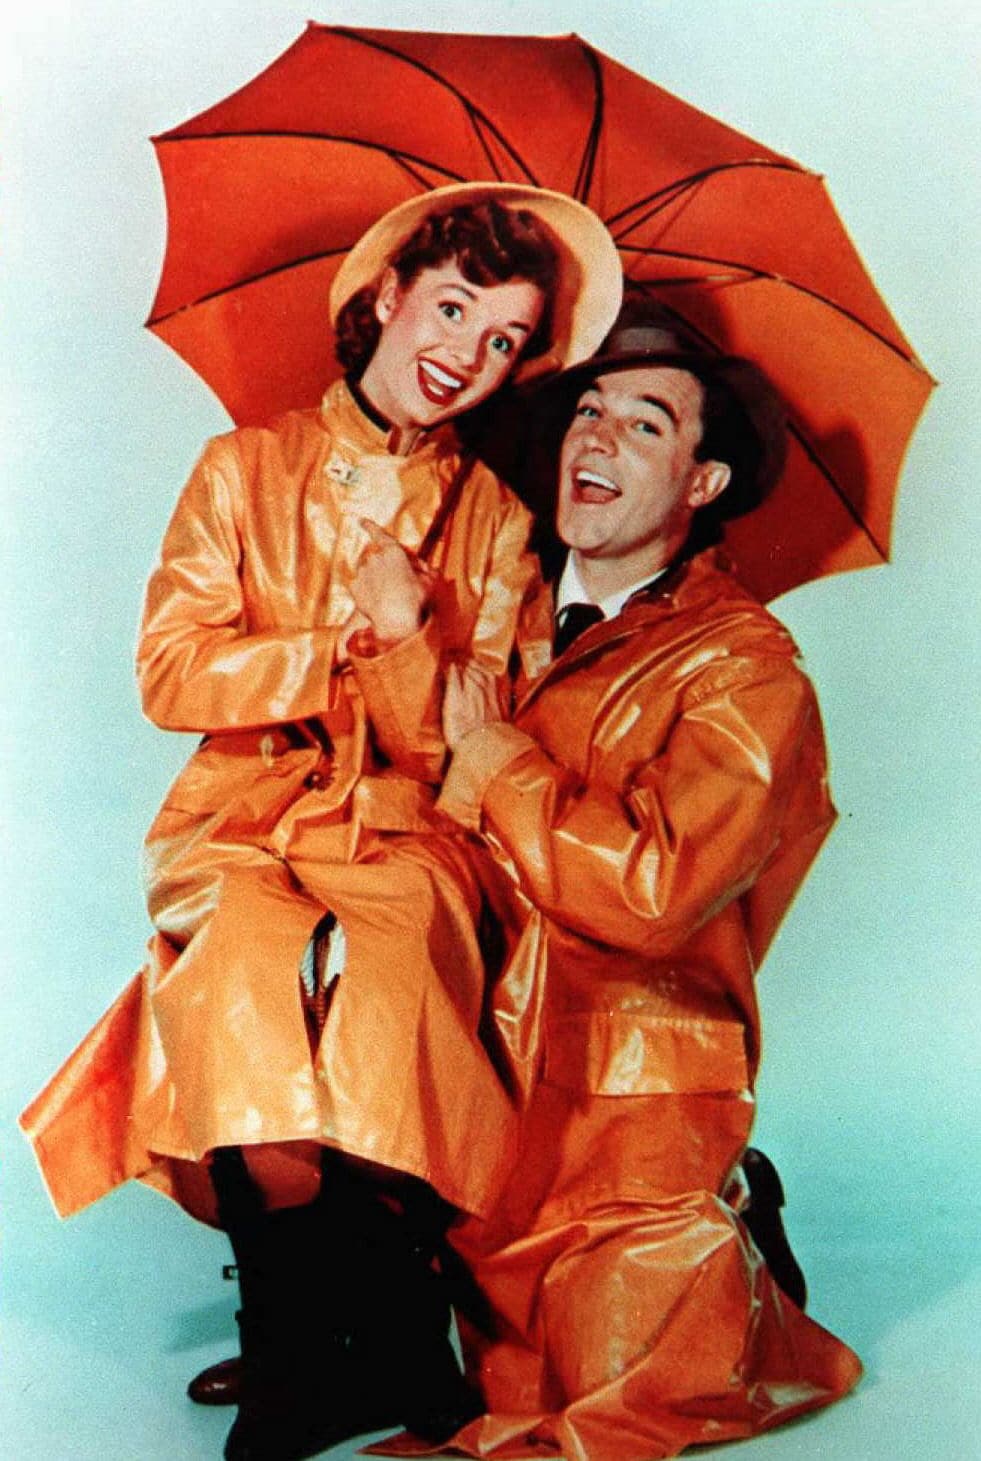 Cantando sotto la pioggia (1951), un cult del musical hollywoodiano